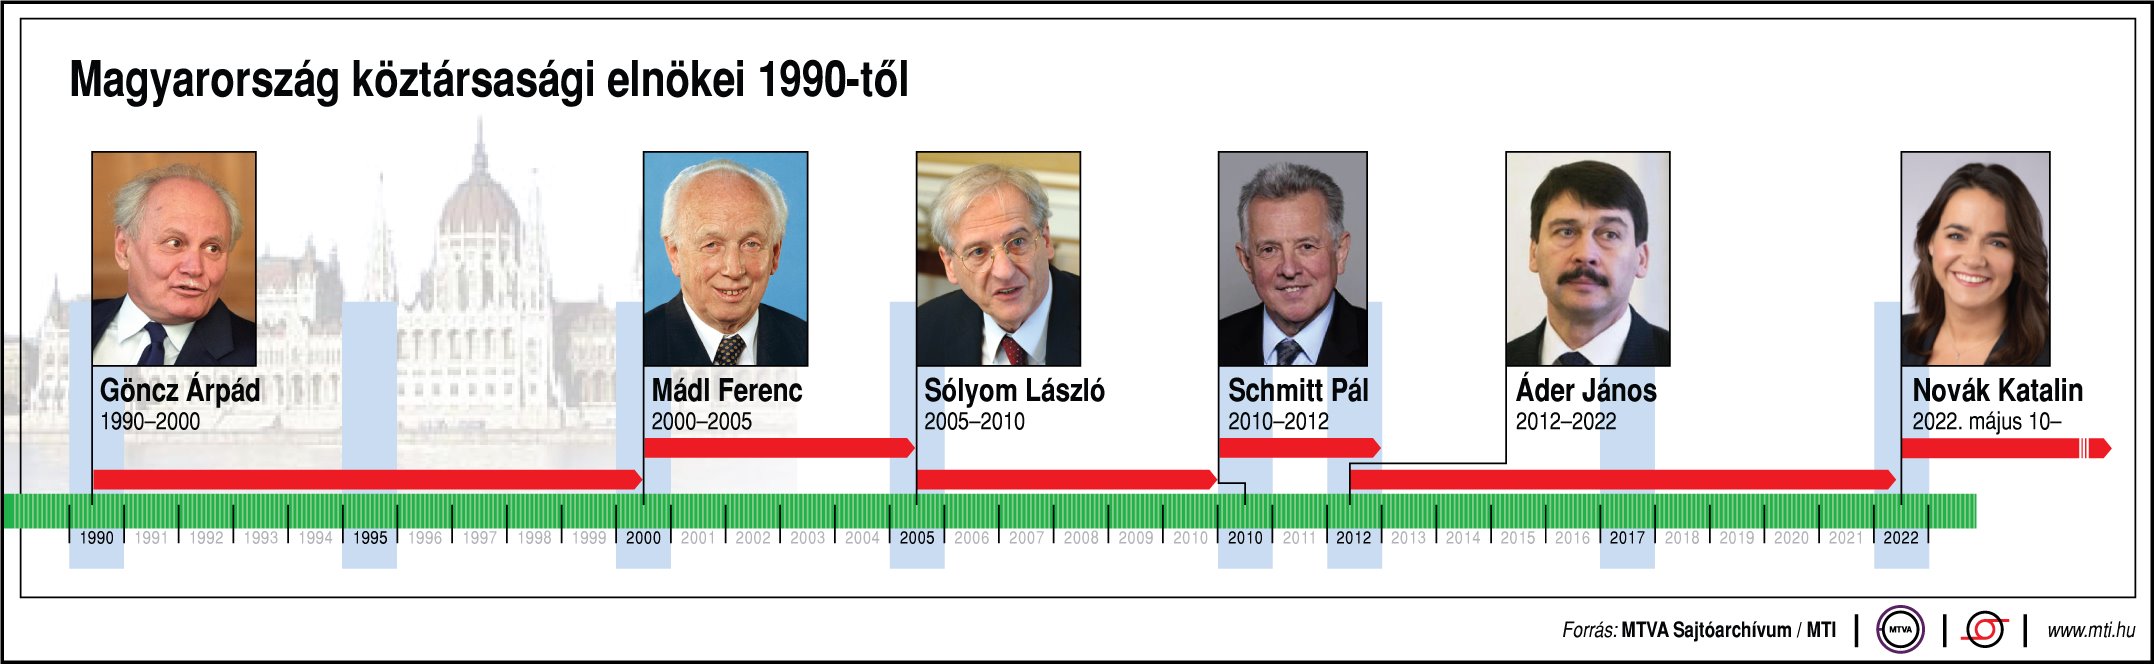 maďarským prezidentem od roku 1990